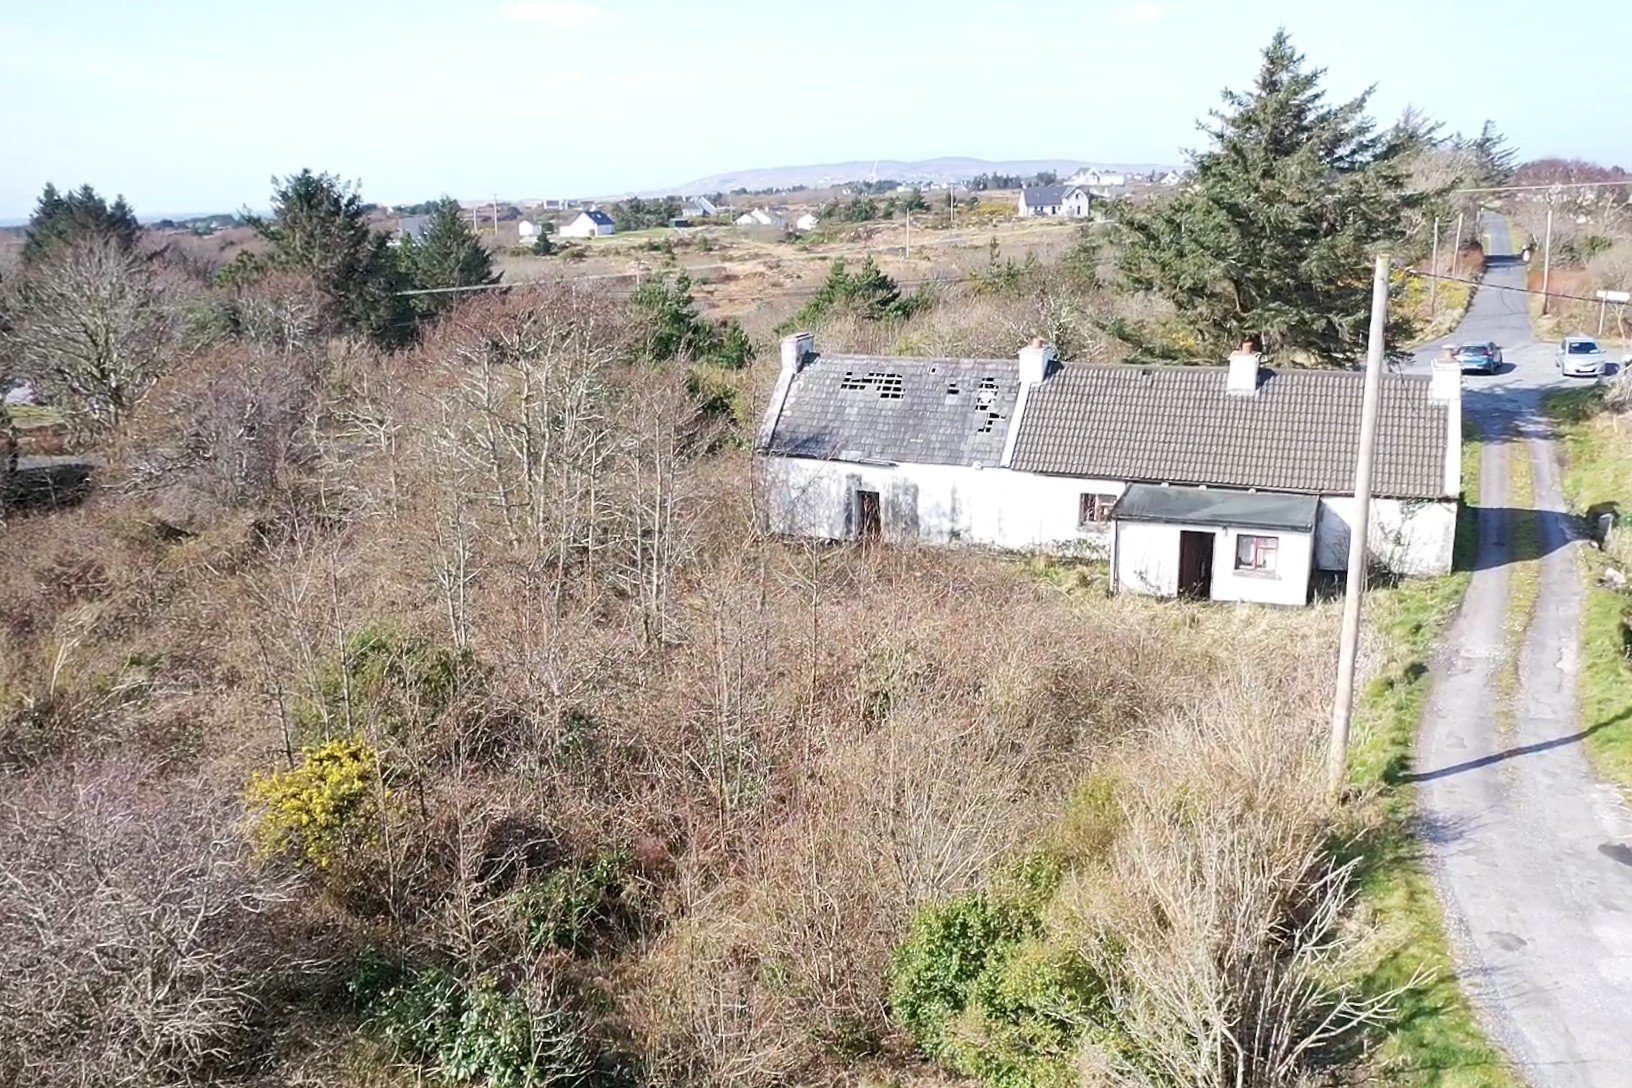 Crickamore, Burtonport – 1.40 acres with 2 Semi-detached dwelling.